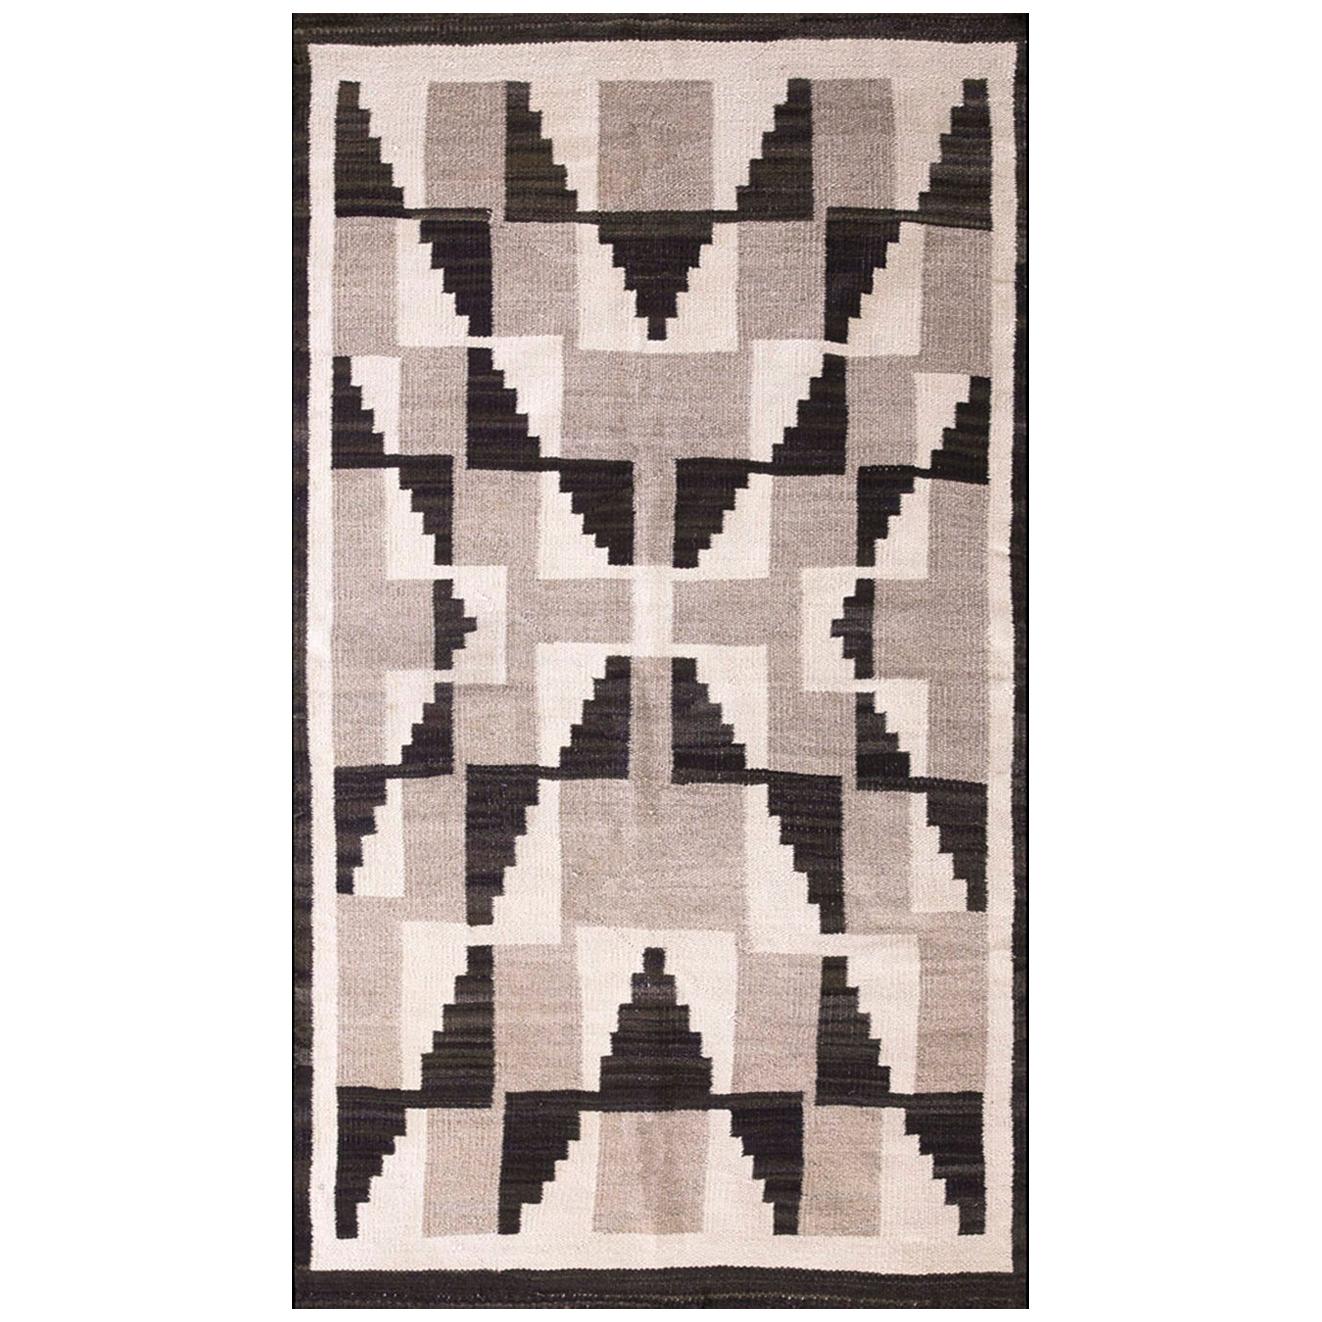 Early 20th Century American Navajo Carpet ( 3' x 5'4" - 91 x 163 )